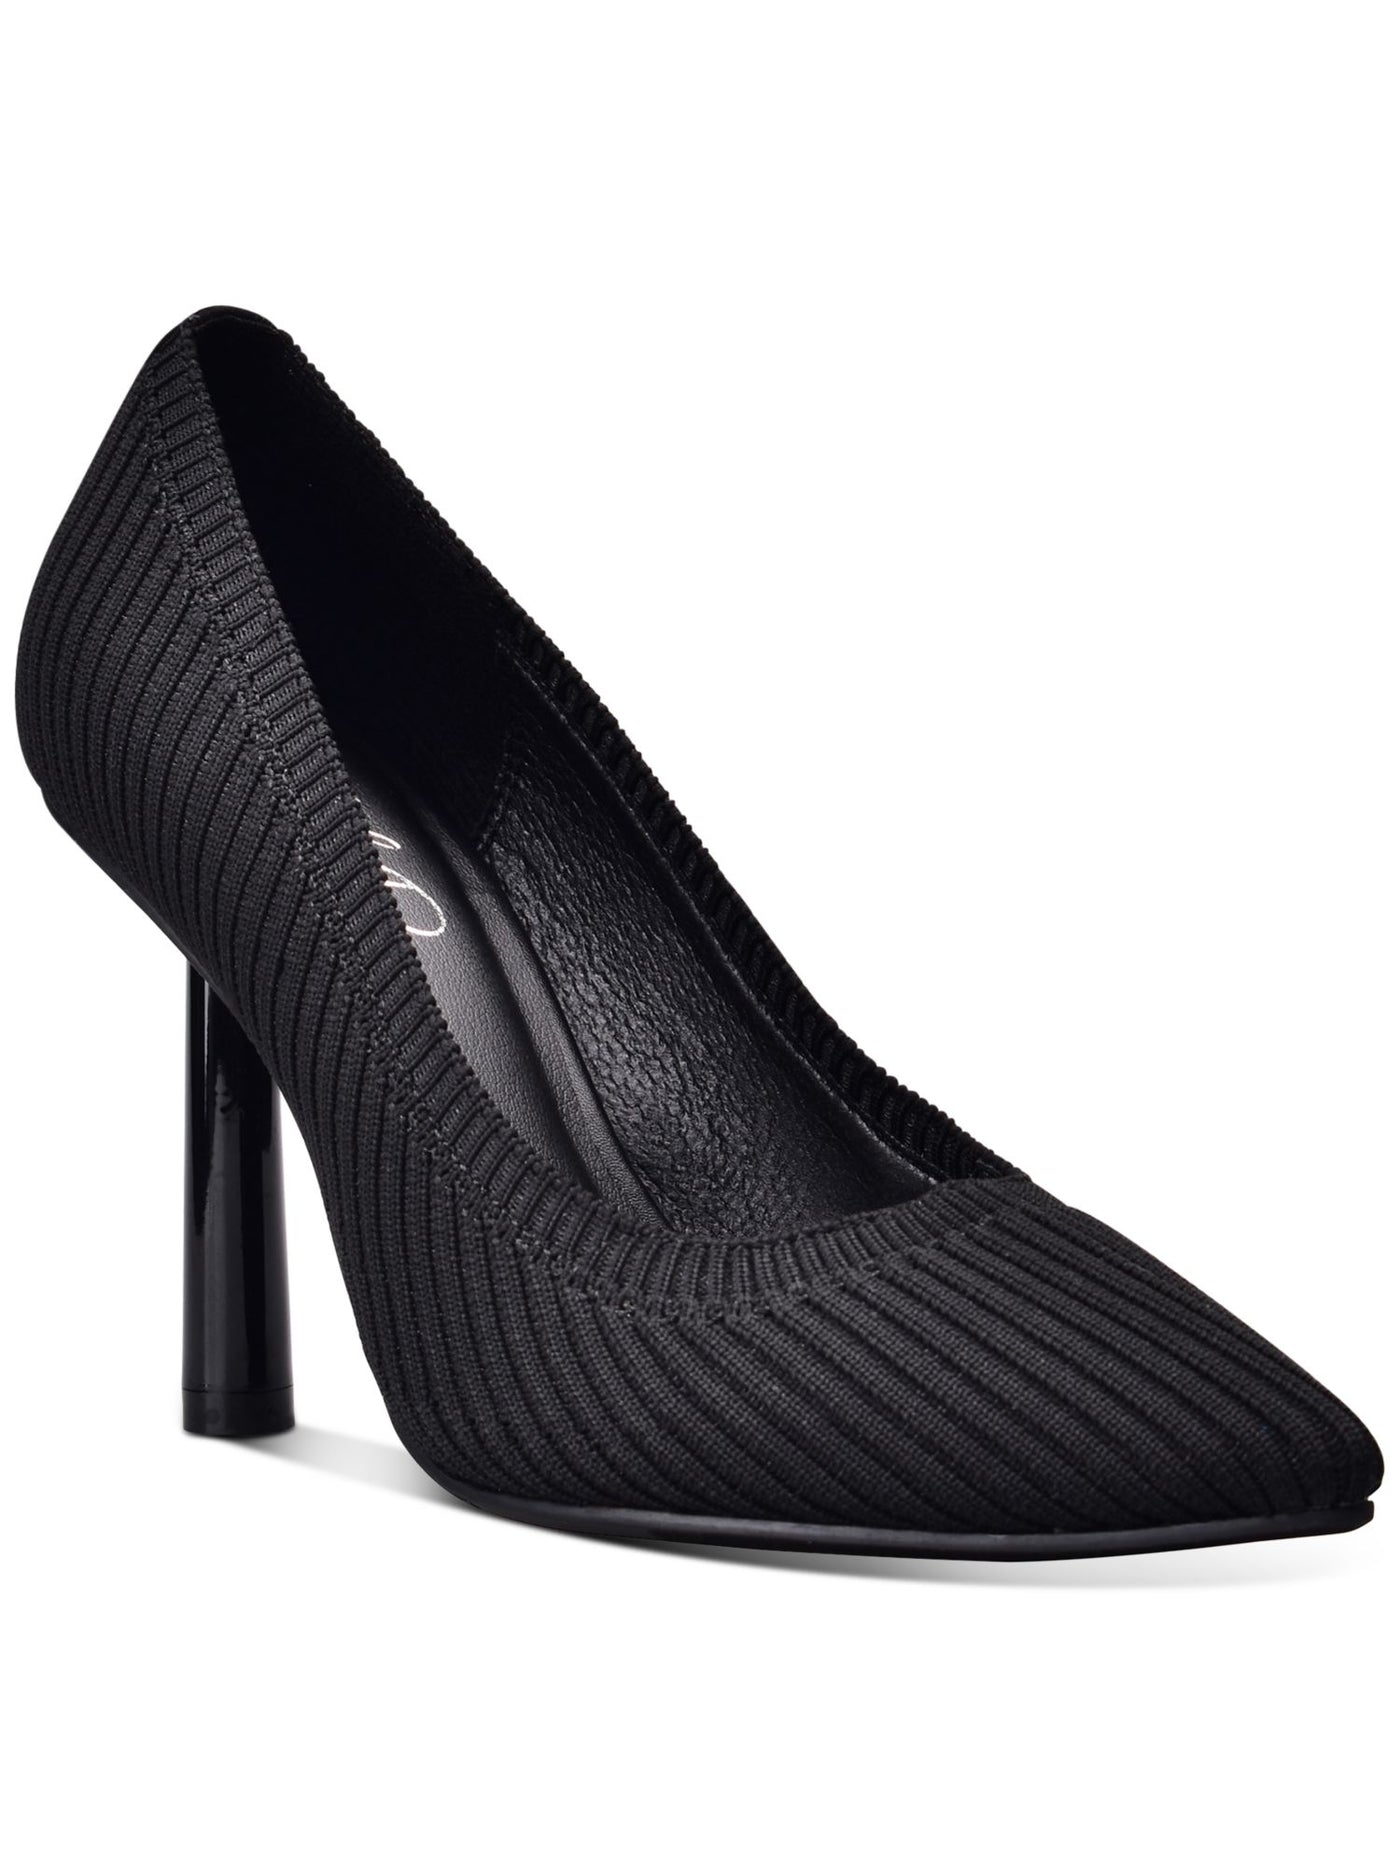 WILD PAIR Womens Black Striped Comfort Daliaa Pointed Toe Stiletto Slip On Dress Pumps Shoes 10 M